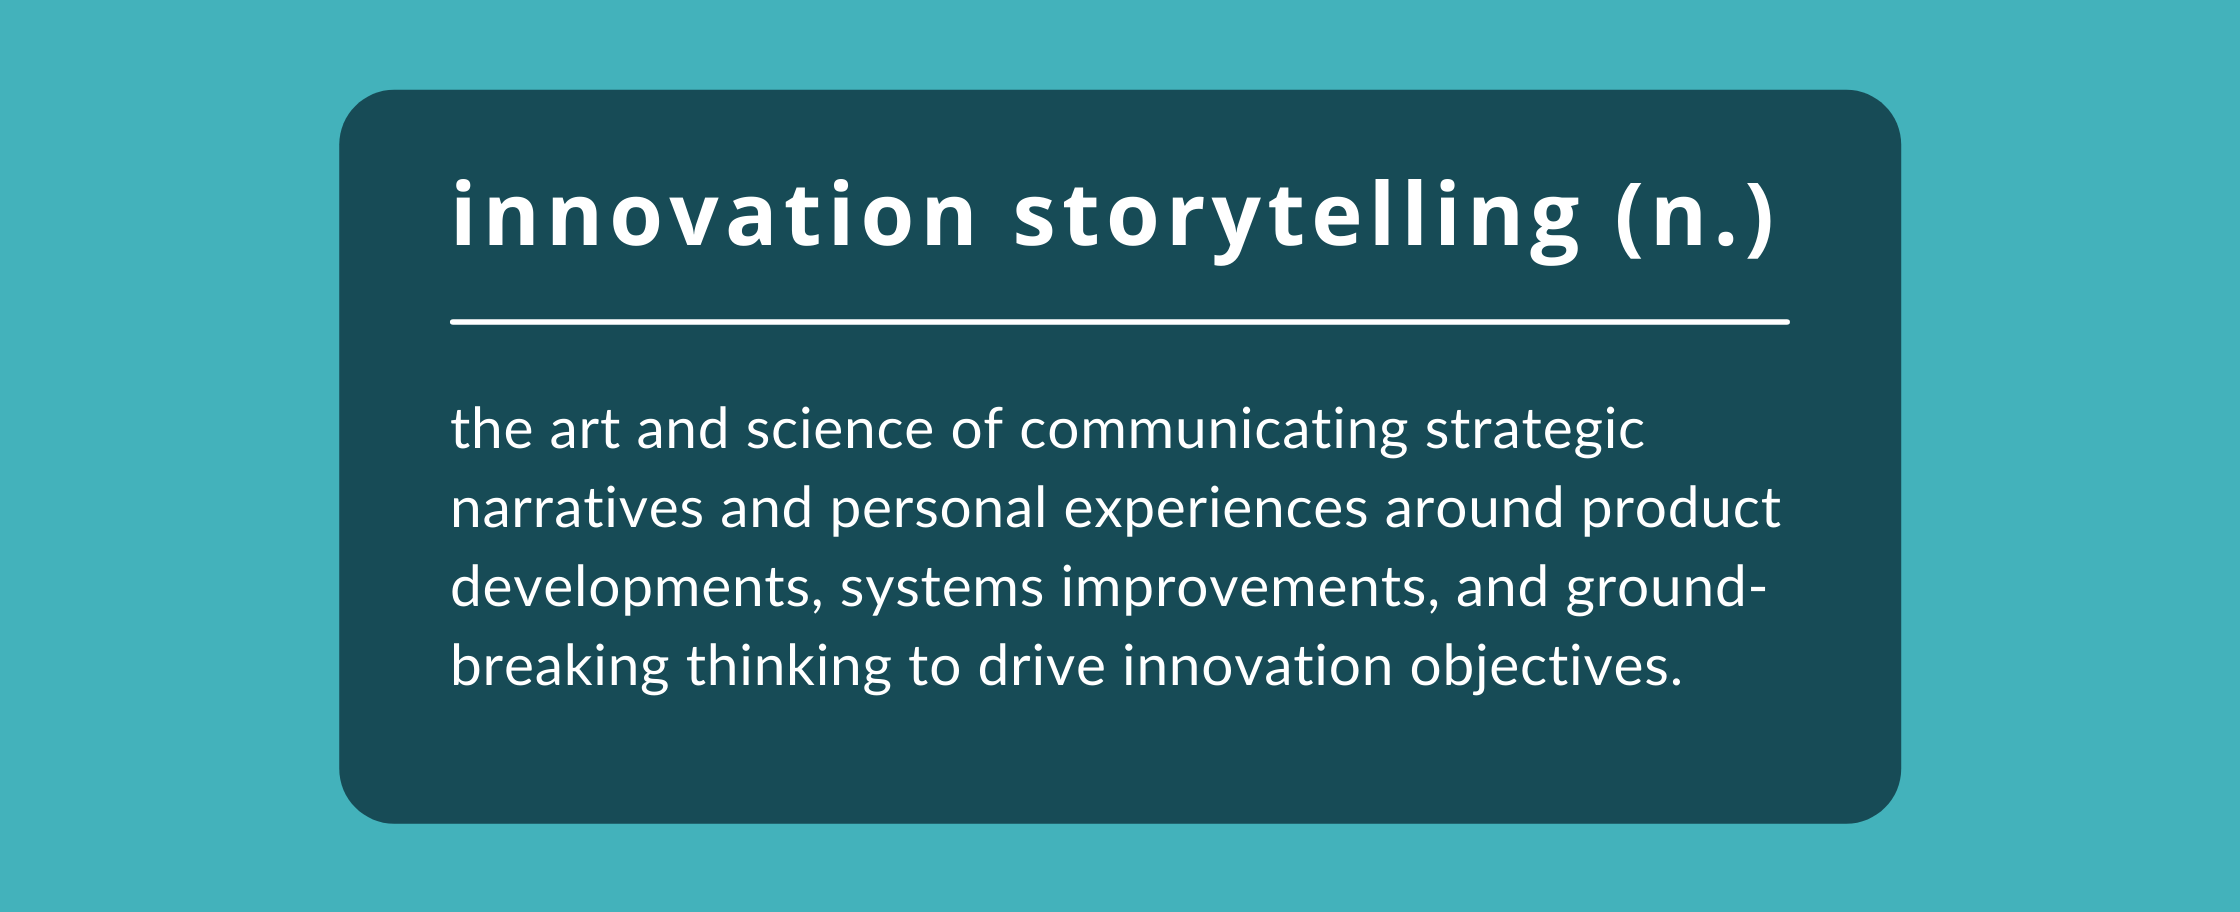 strategic innovation narratives